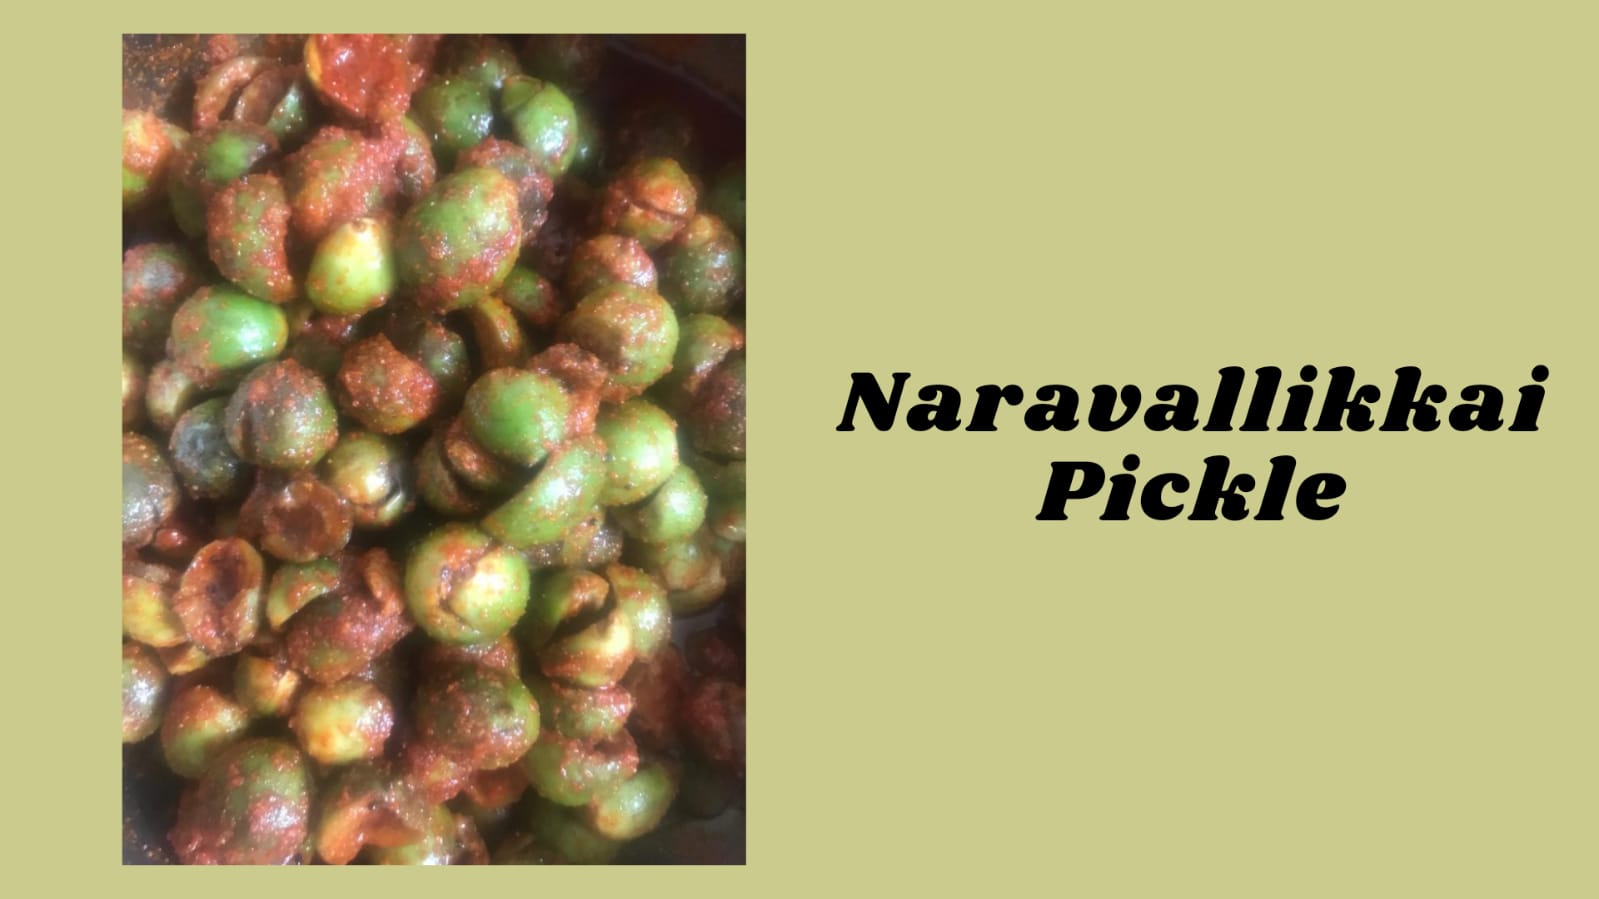 Recipe of the month - Naravallikkai Pickle